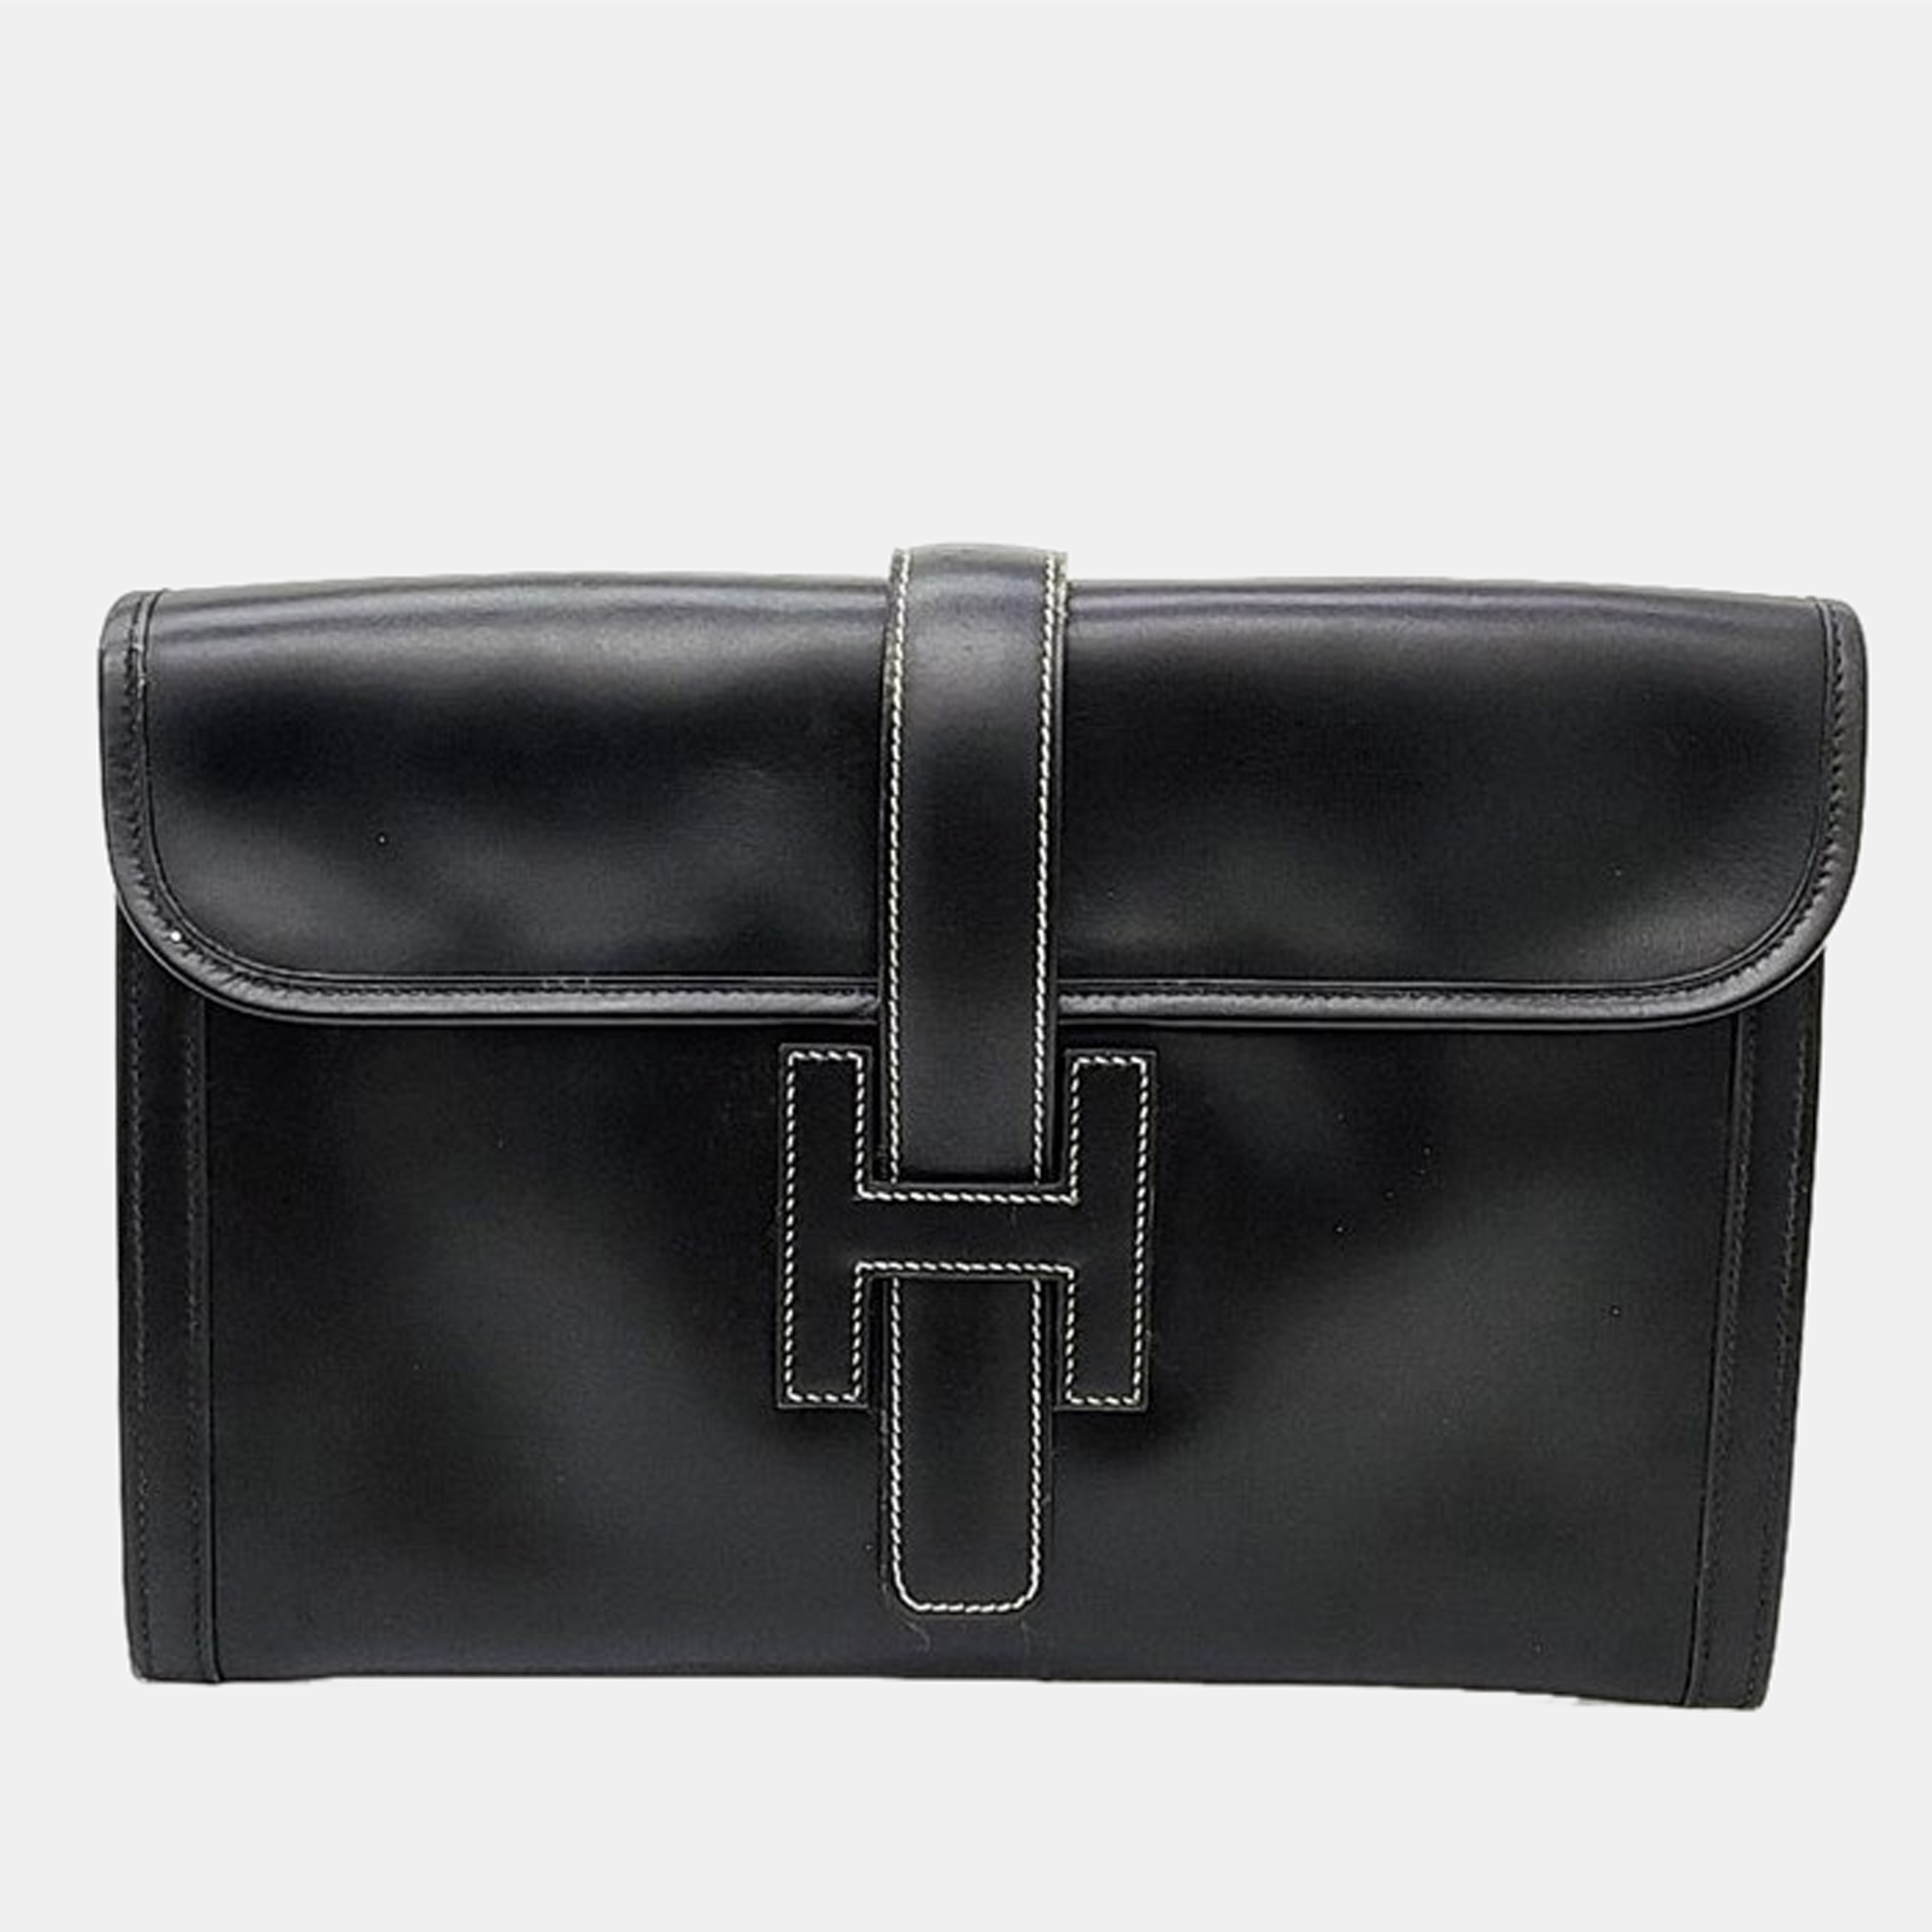 Pre-owned Hermes Leather Elan Jige Pm Clutch In Black